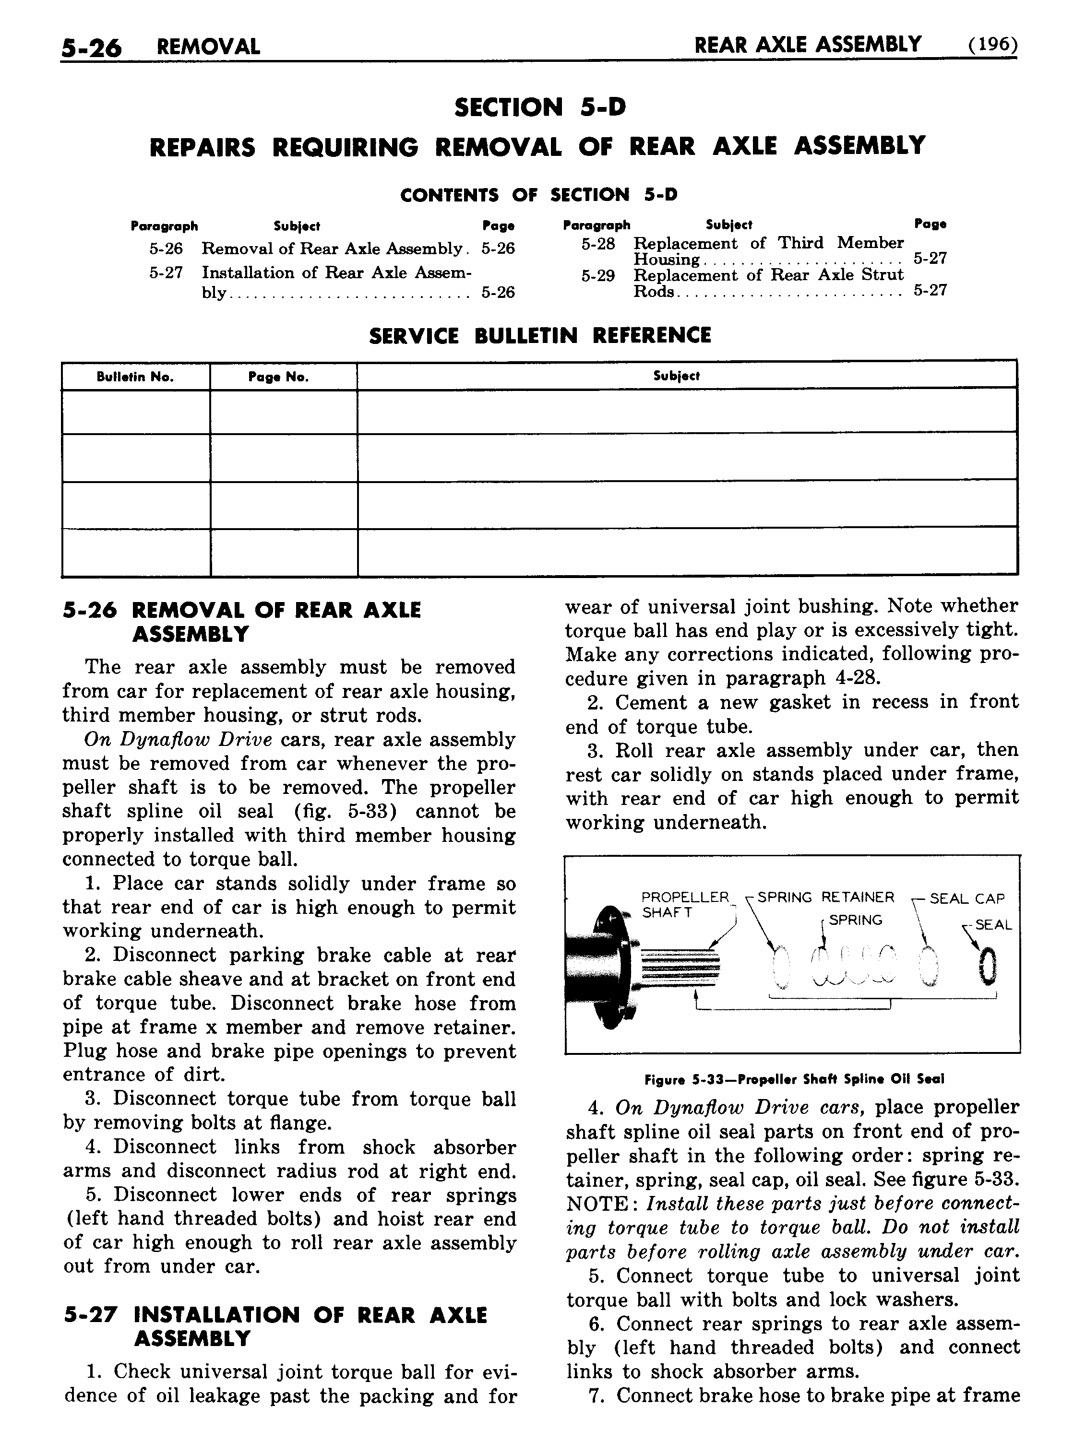 n_06 1948 Buick Shop Manual - Rear Axle-026-026.jpg